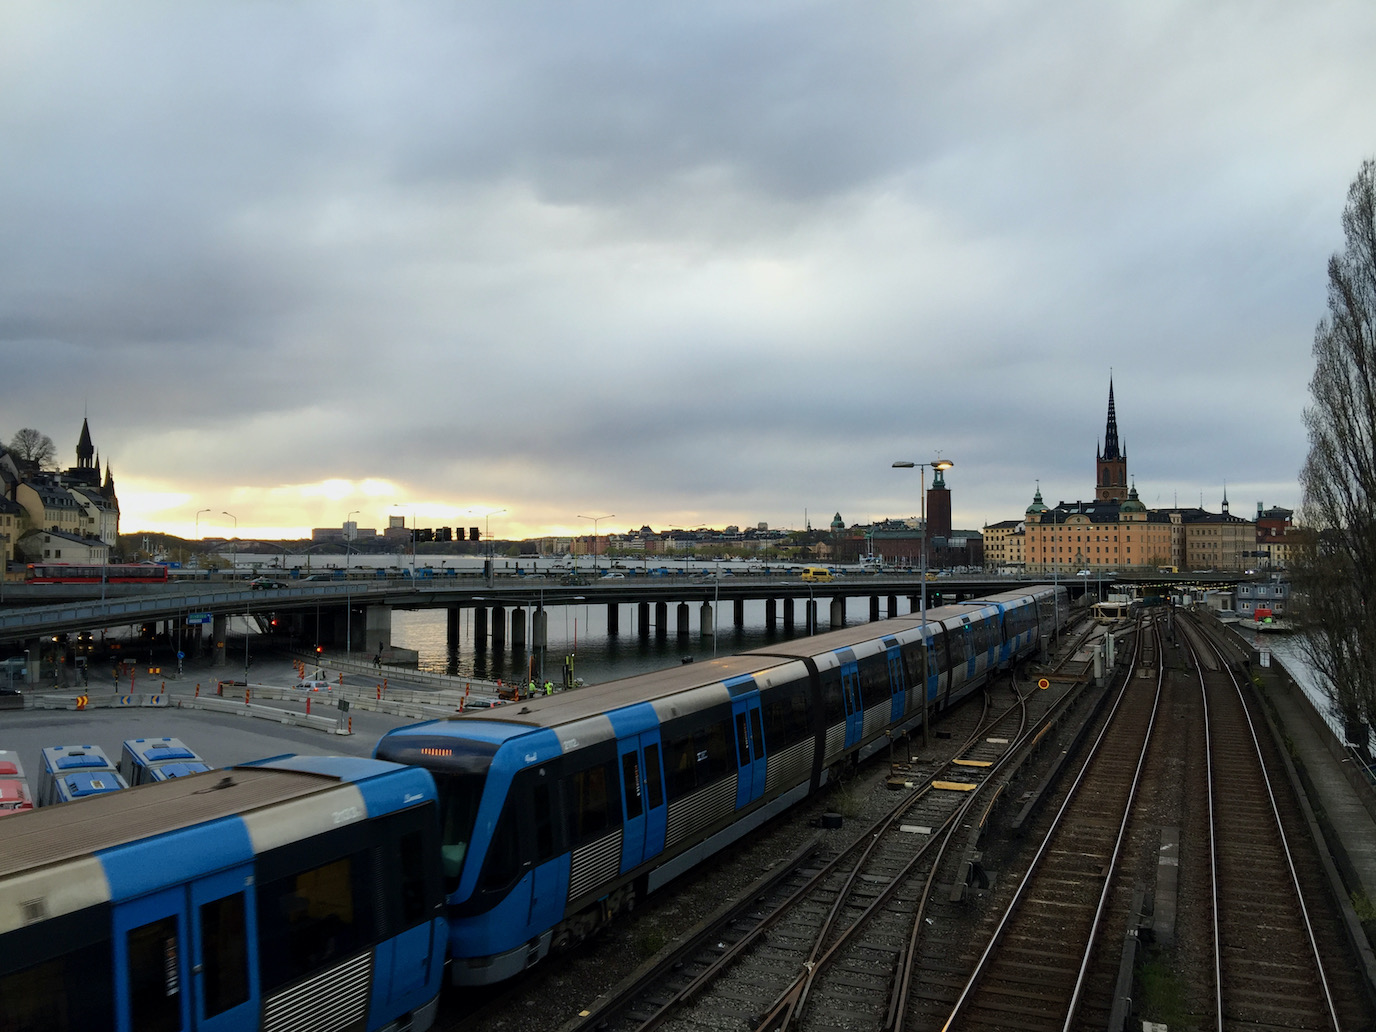 Picture taken of Slussen, Stockholm in 2015